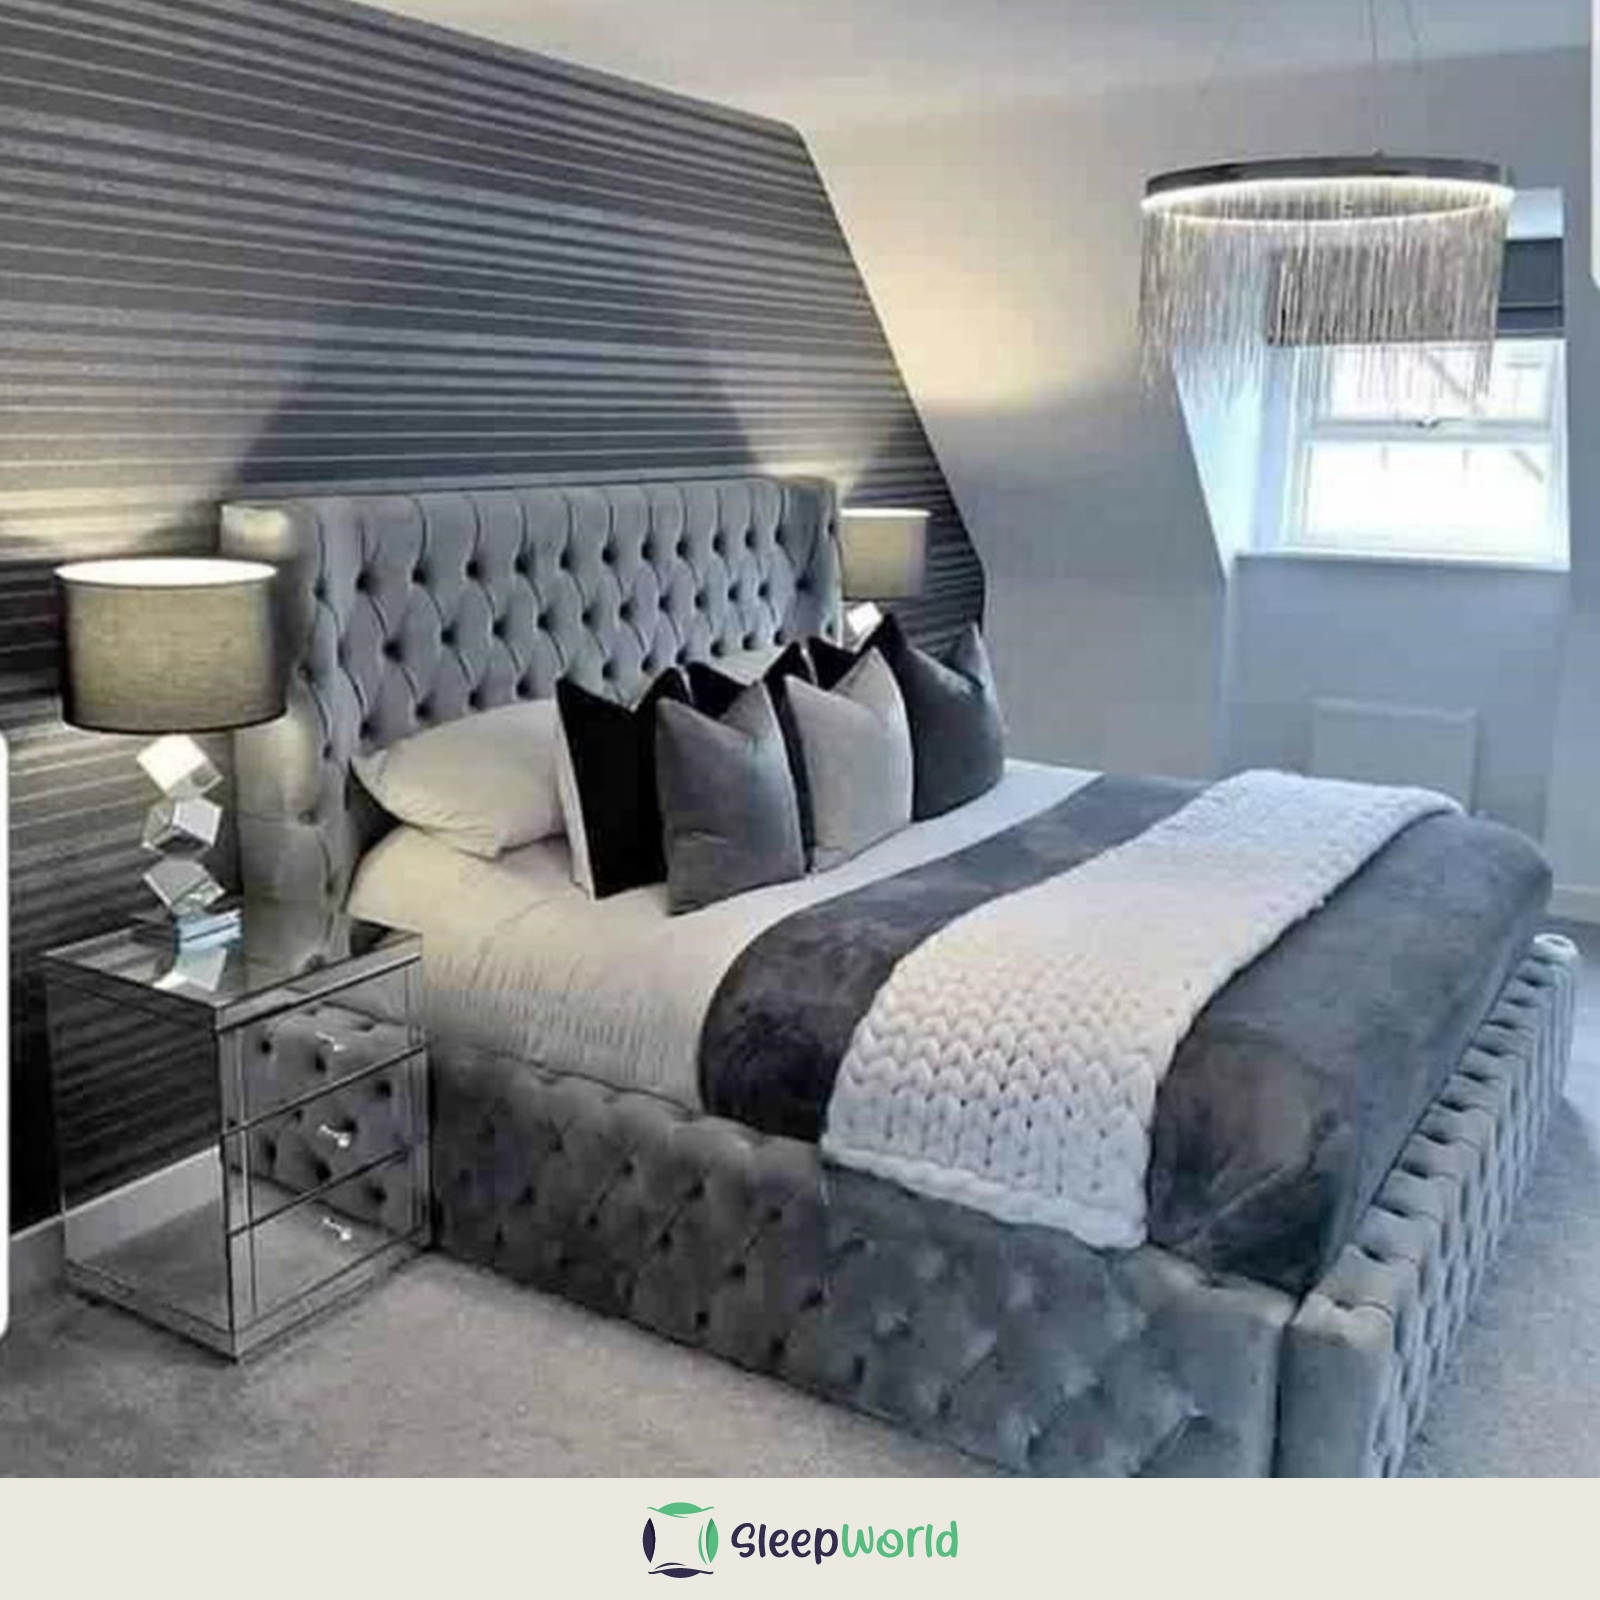 Ambassador Bed – Double – 4FT6 – Gas Lift Ottoman Base – Optional Mattress – Upholstered – Sleep World Furniture